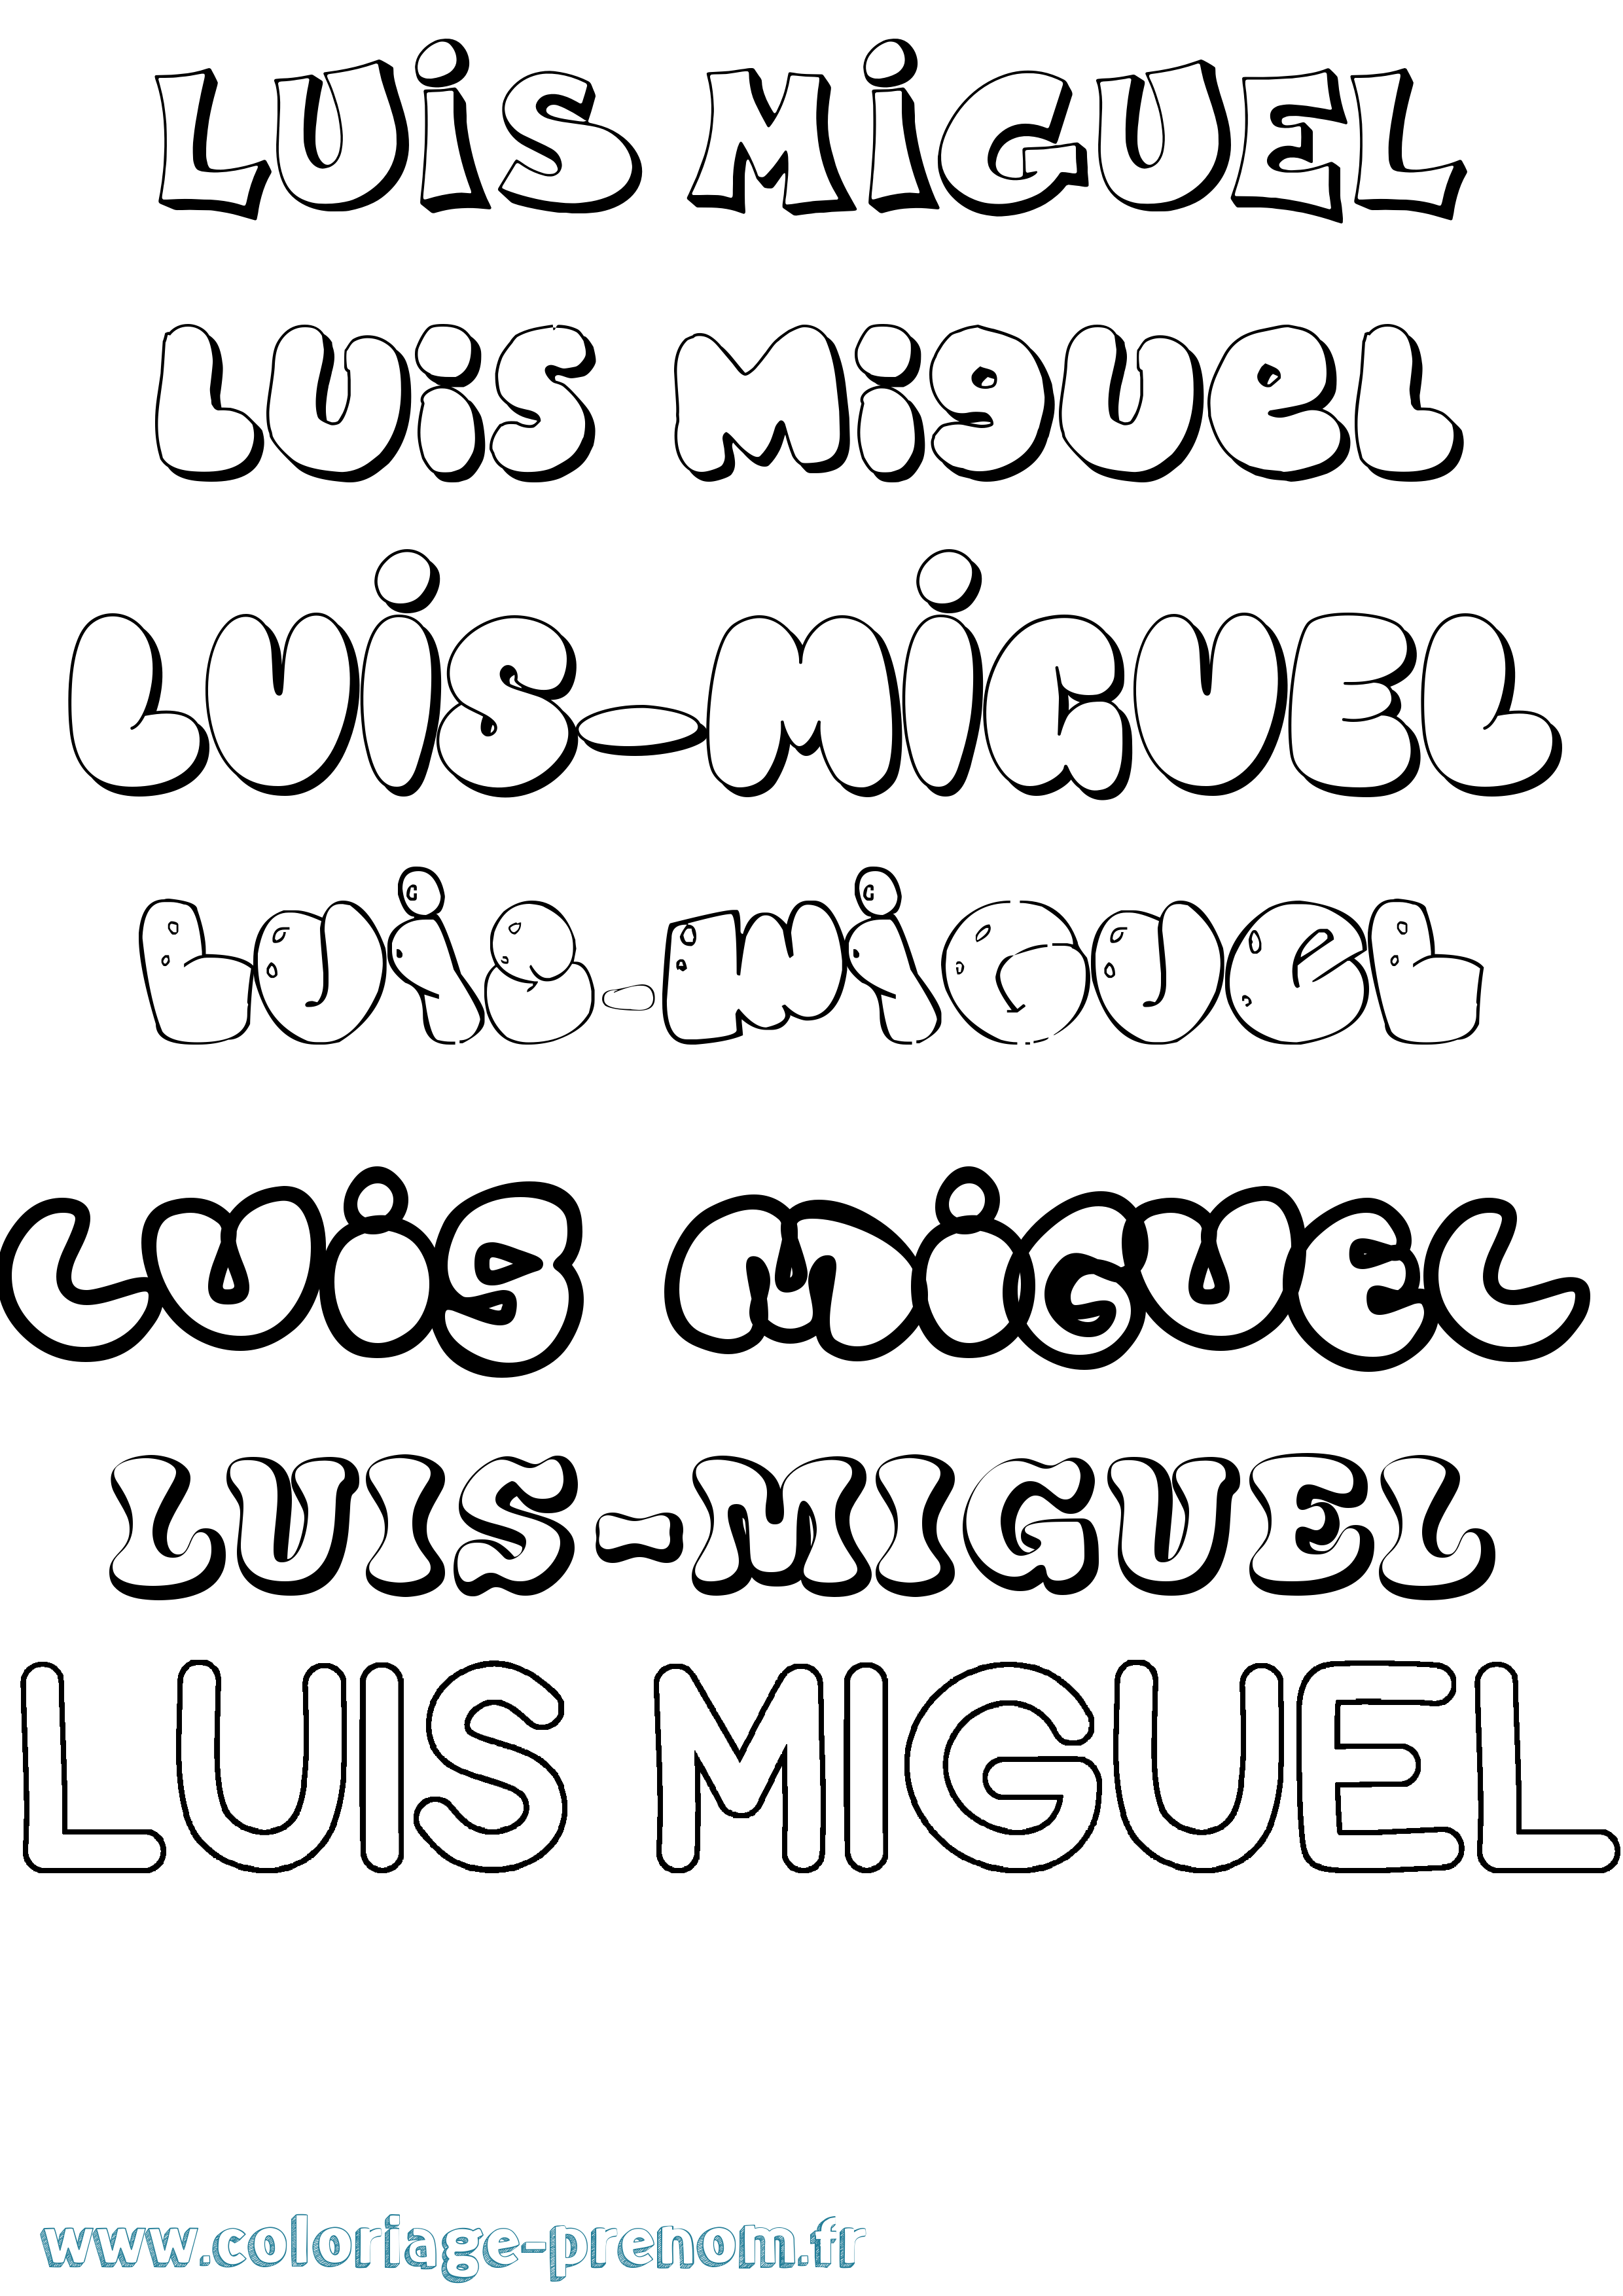 Coloriage prénom Luis-Miguel Bubble